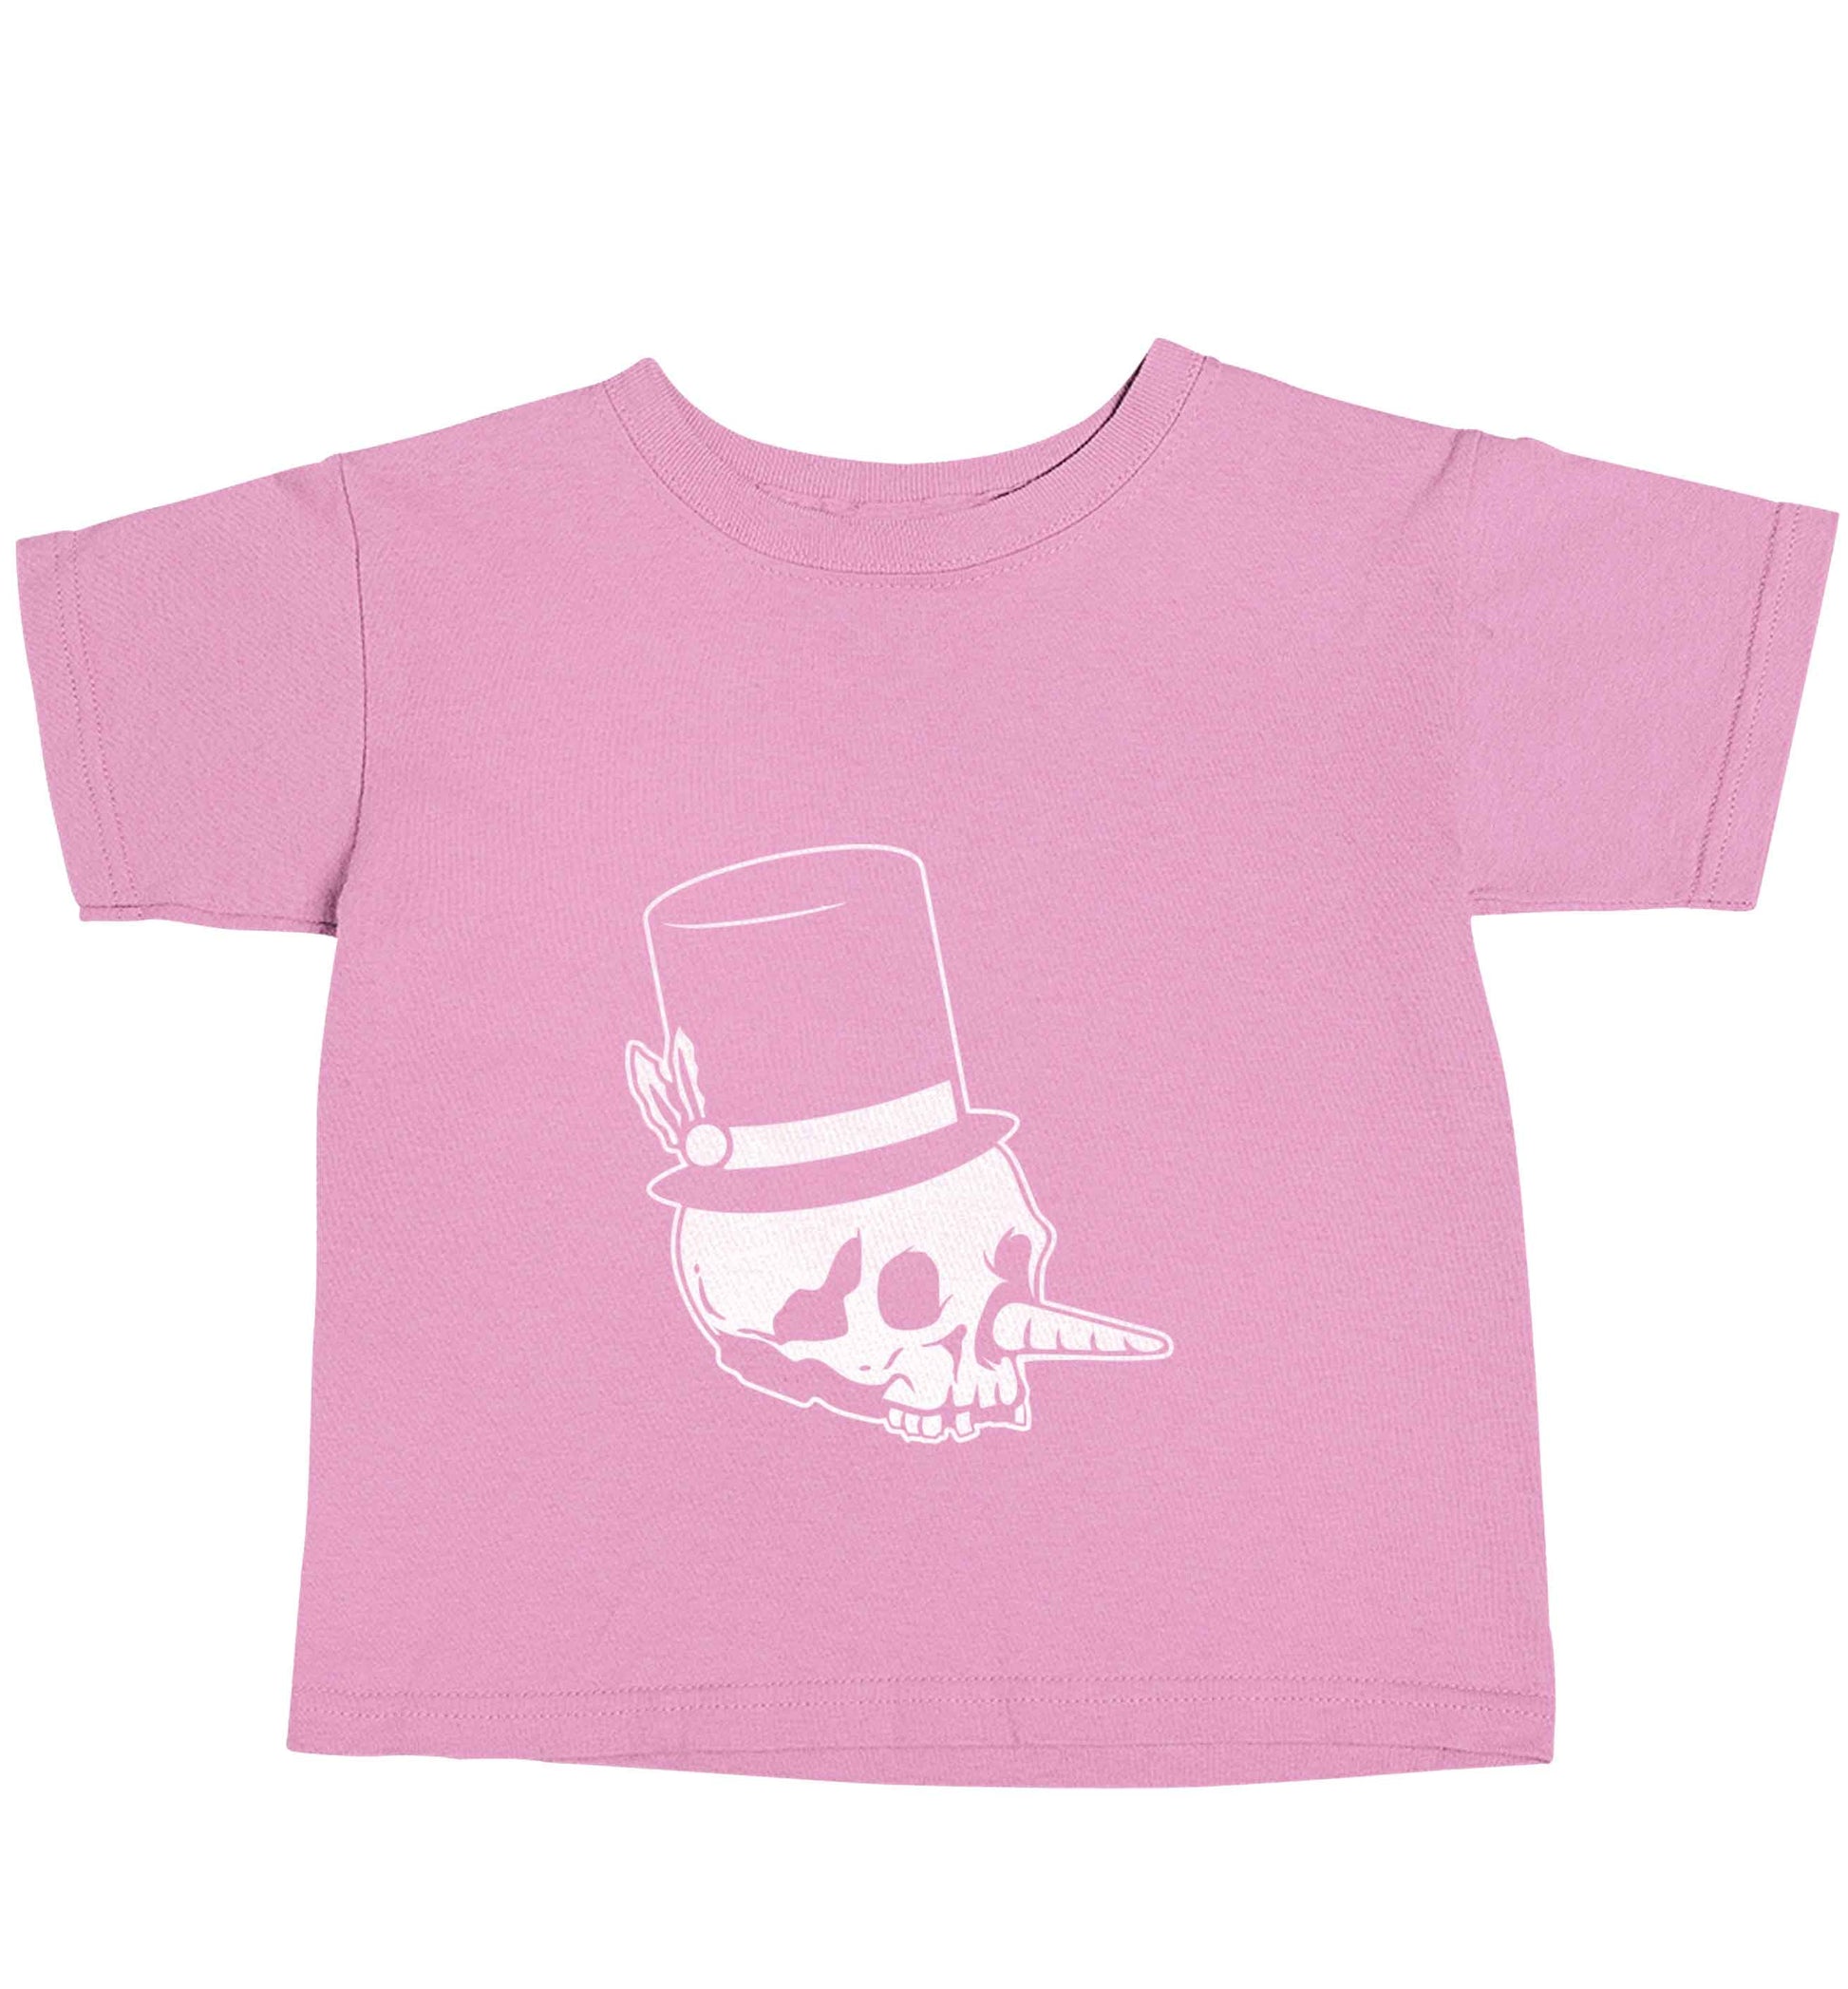 Snowman punk light pink baby toddler Tshirt 2 Years